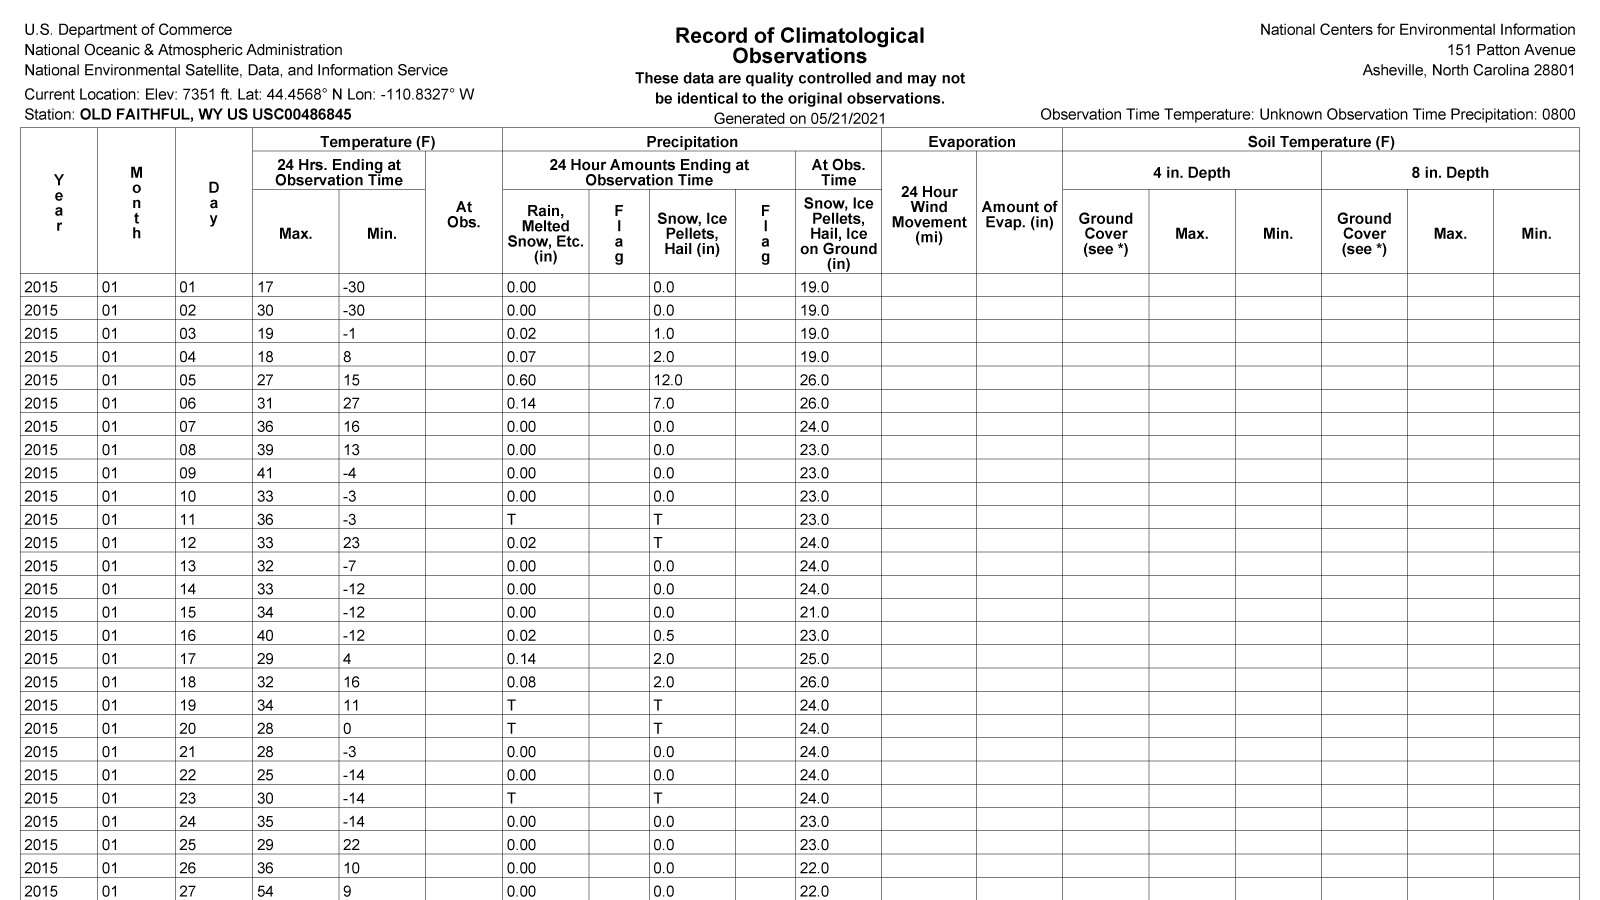 Daily Temperature and Precipitation Reports - Data Tables